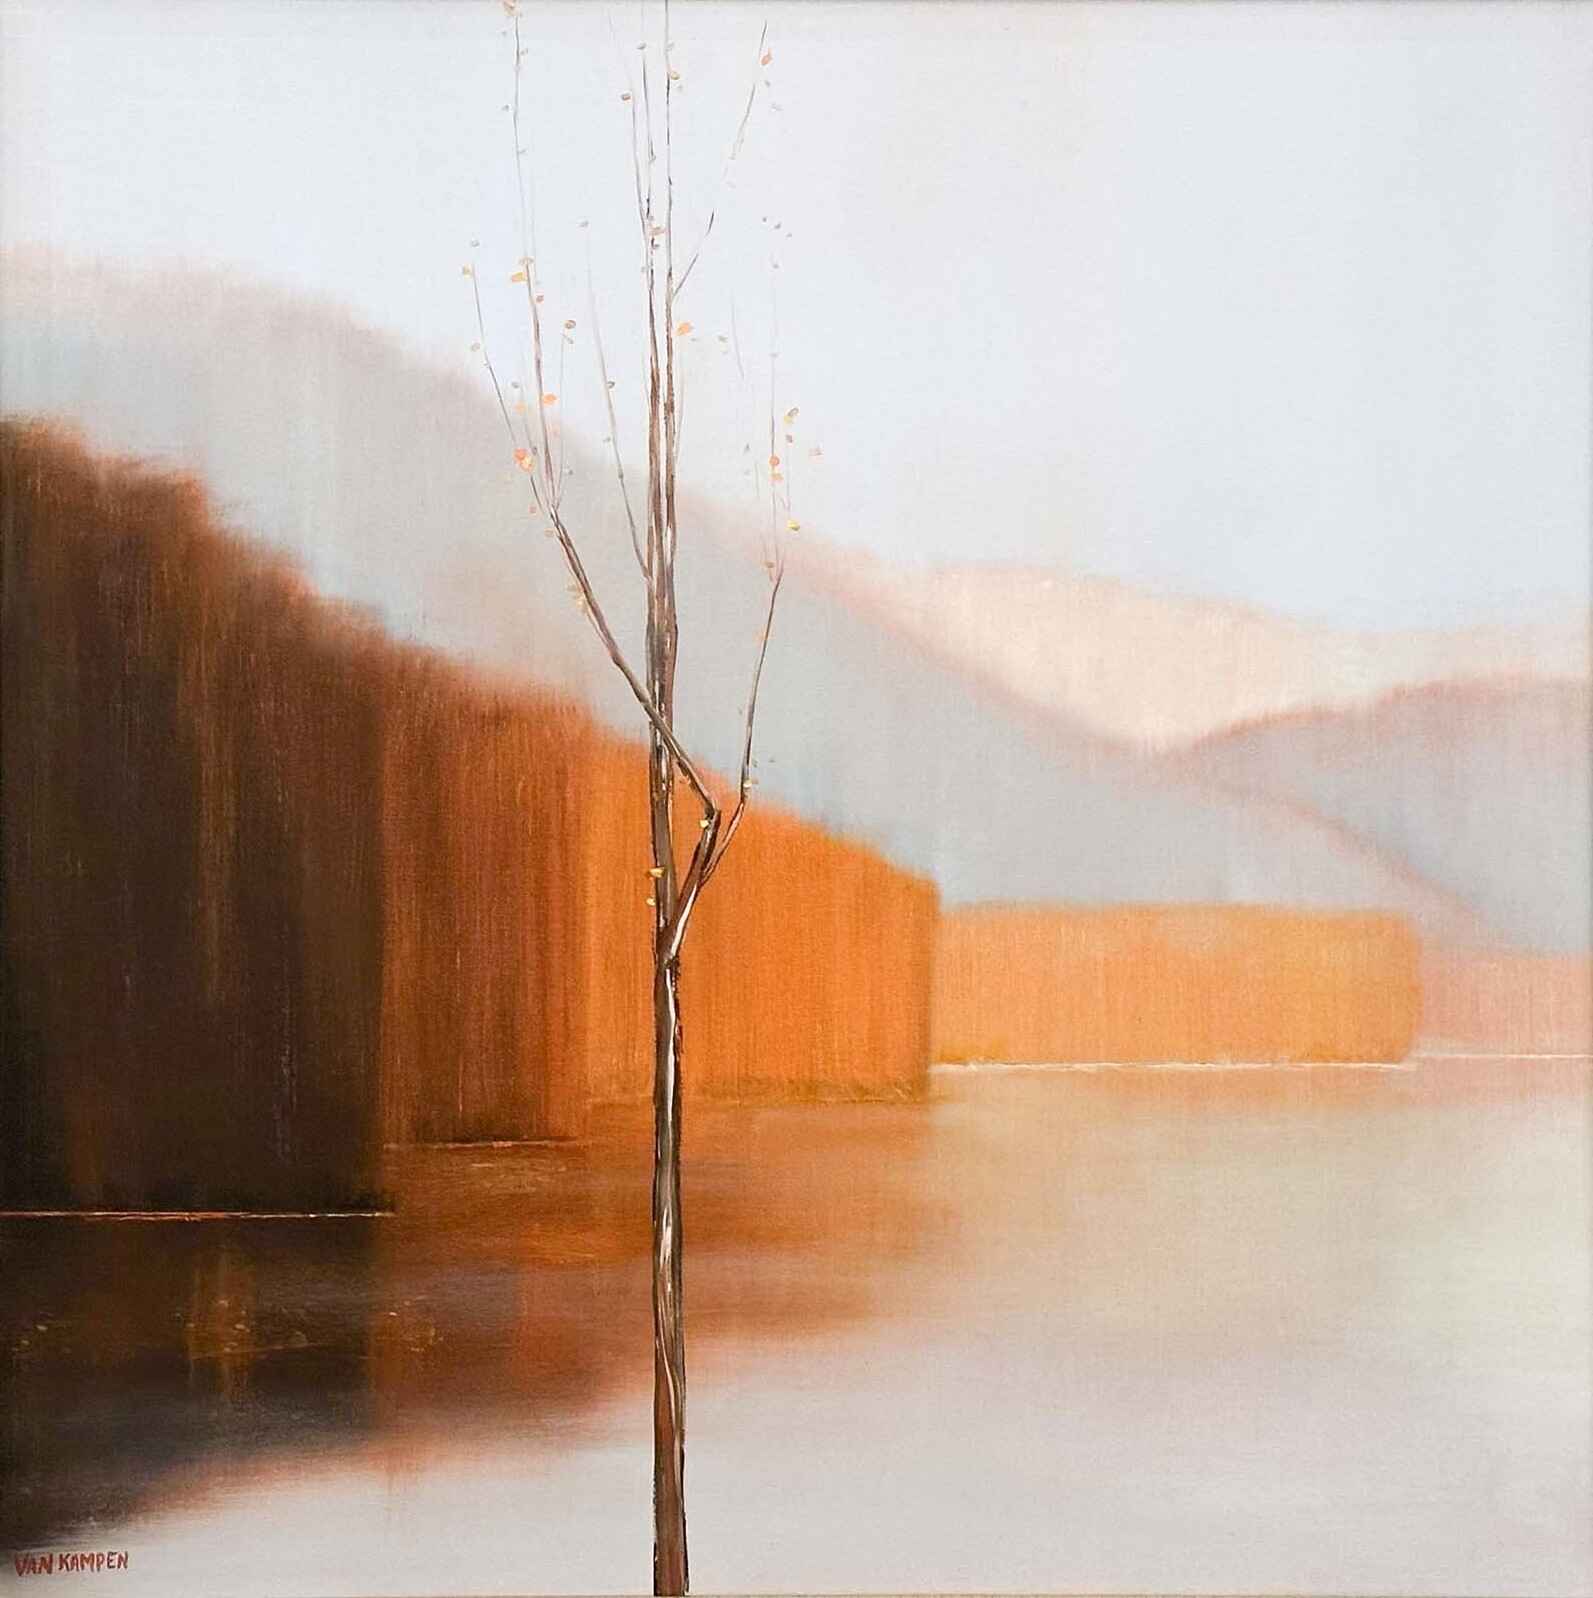 Contemporary art. Title: Autumn Splendor Ⅰ, Oil on Canvas, 30 x 30 in by Canadian artist Katherine van Kampen.